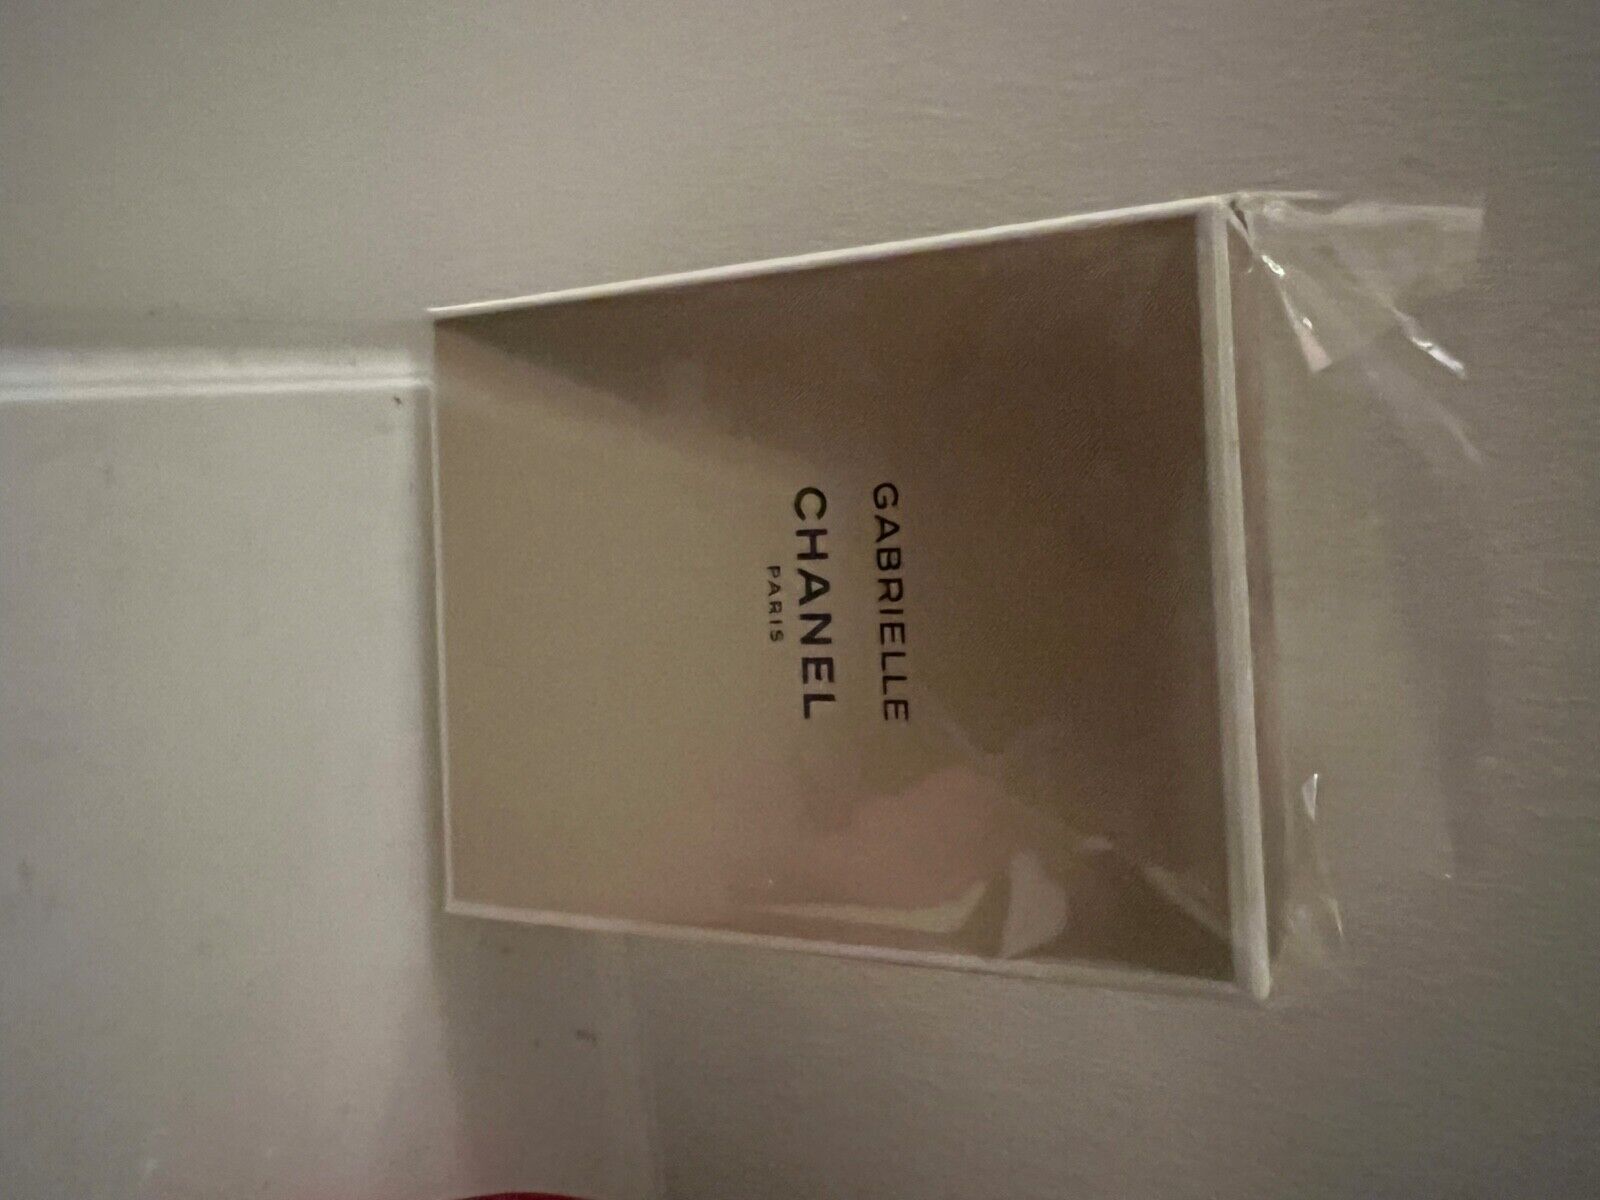 CHANEL GABRIELLE CHANEL Eau de Parfum Spray